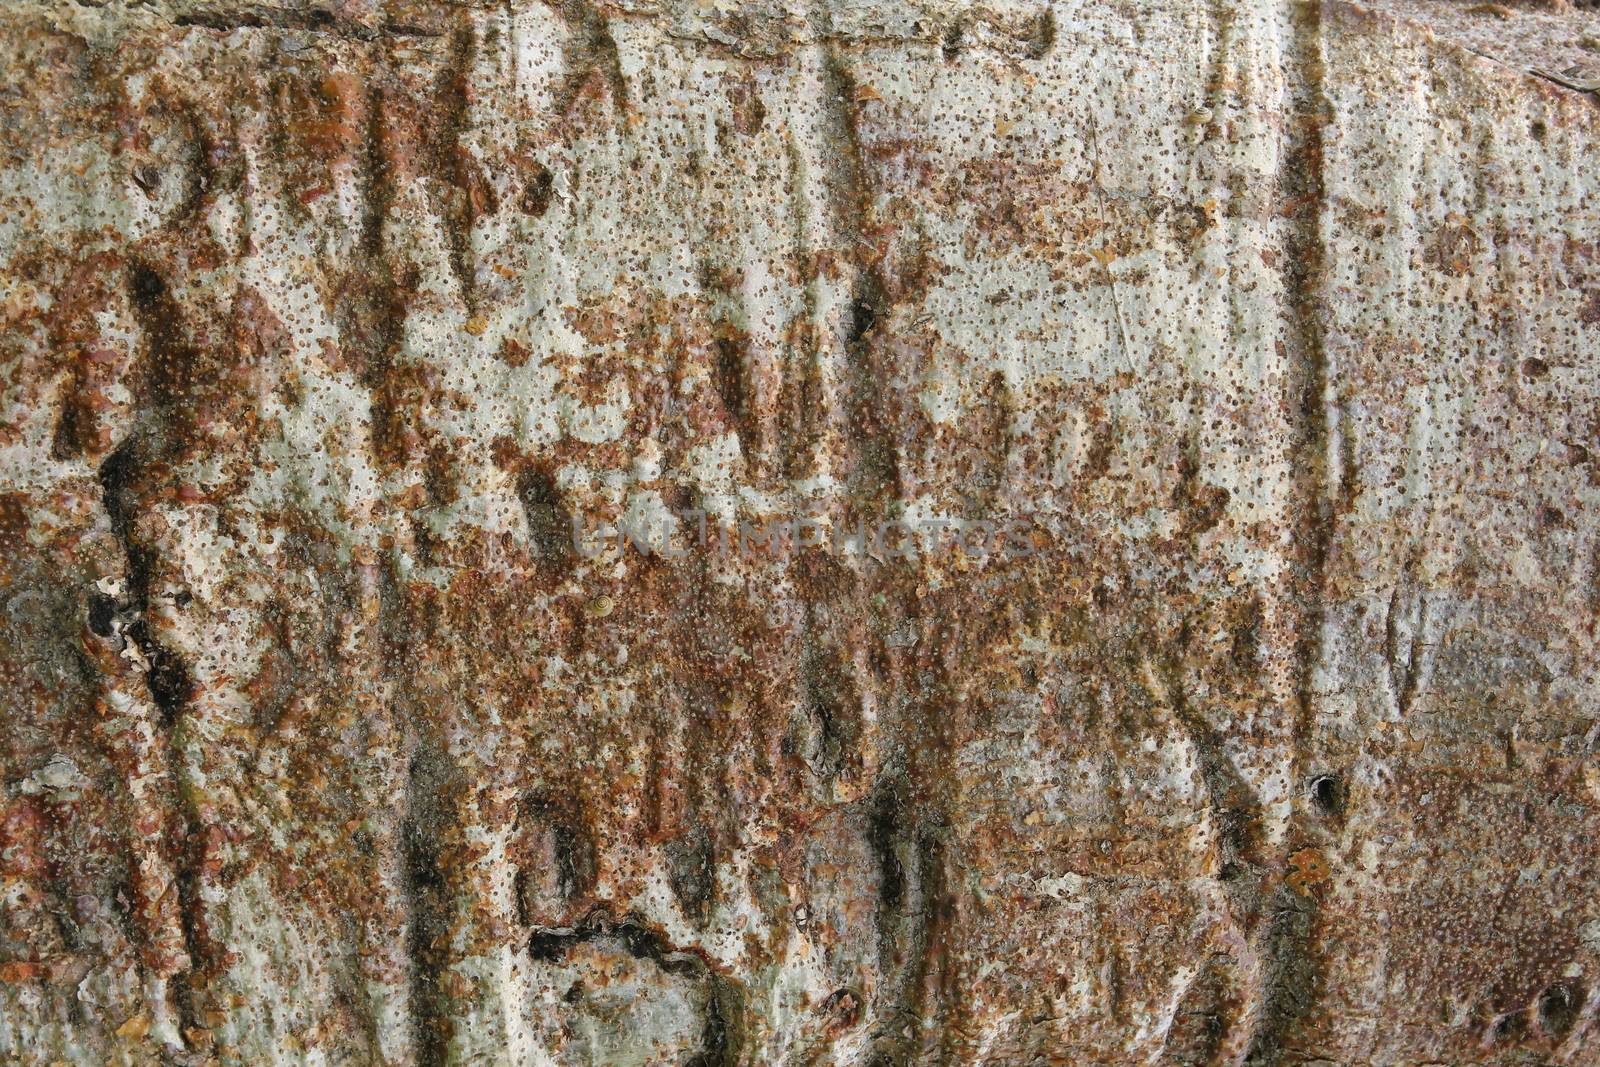 Closeup of the bark of the baobab tree